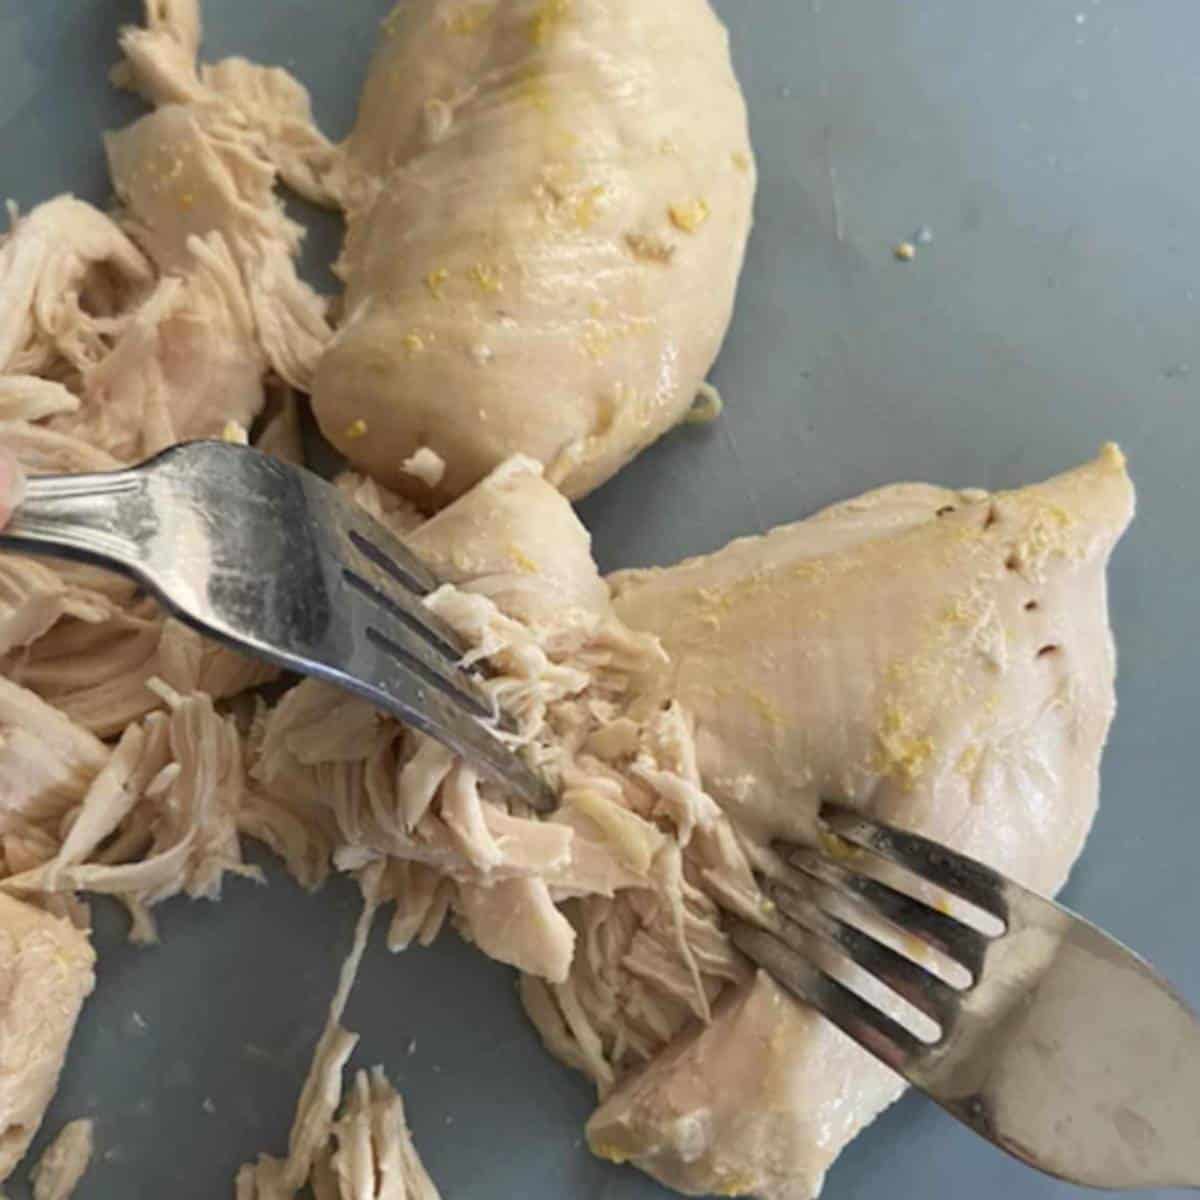 Two forks shredding chicken.